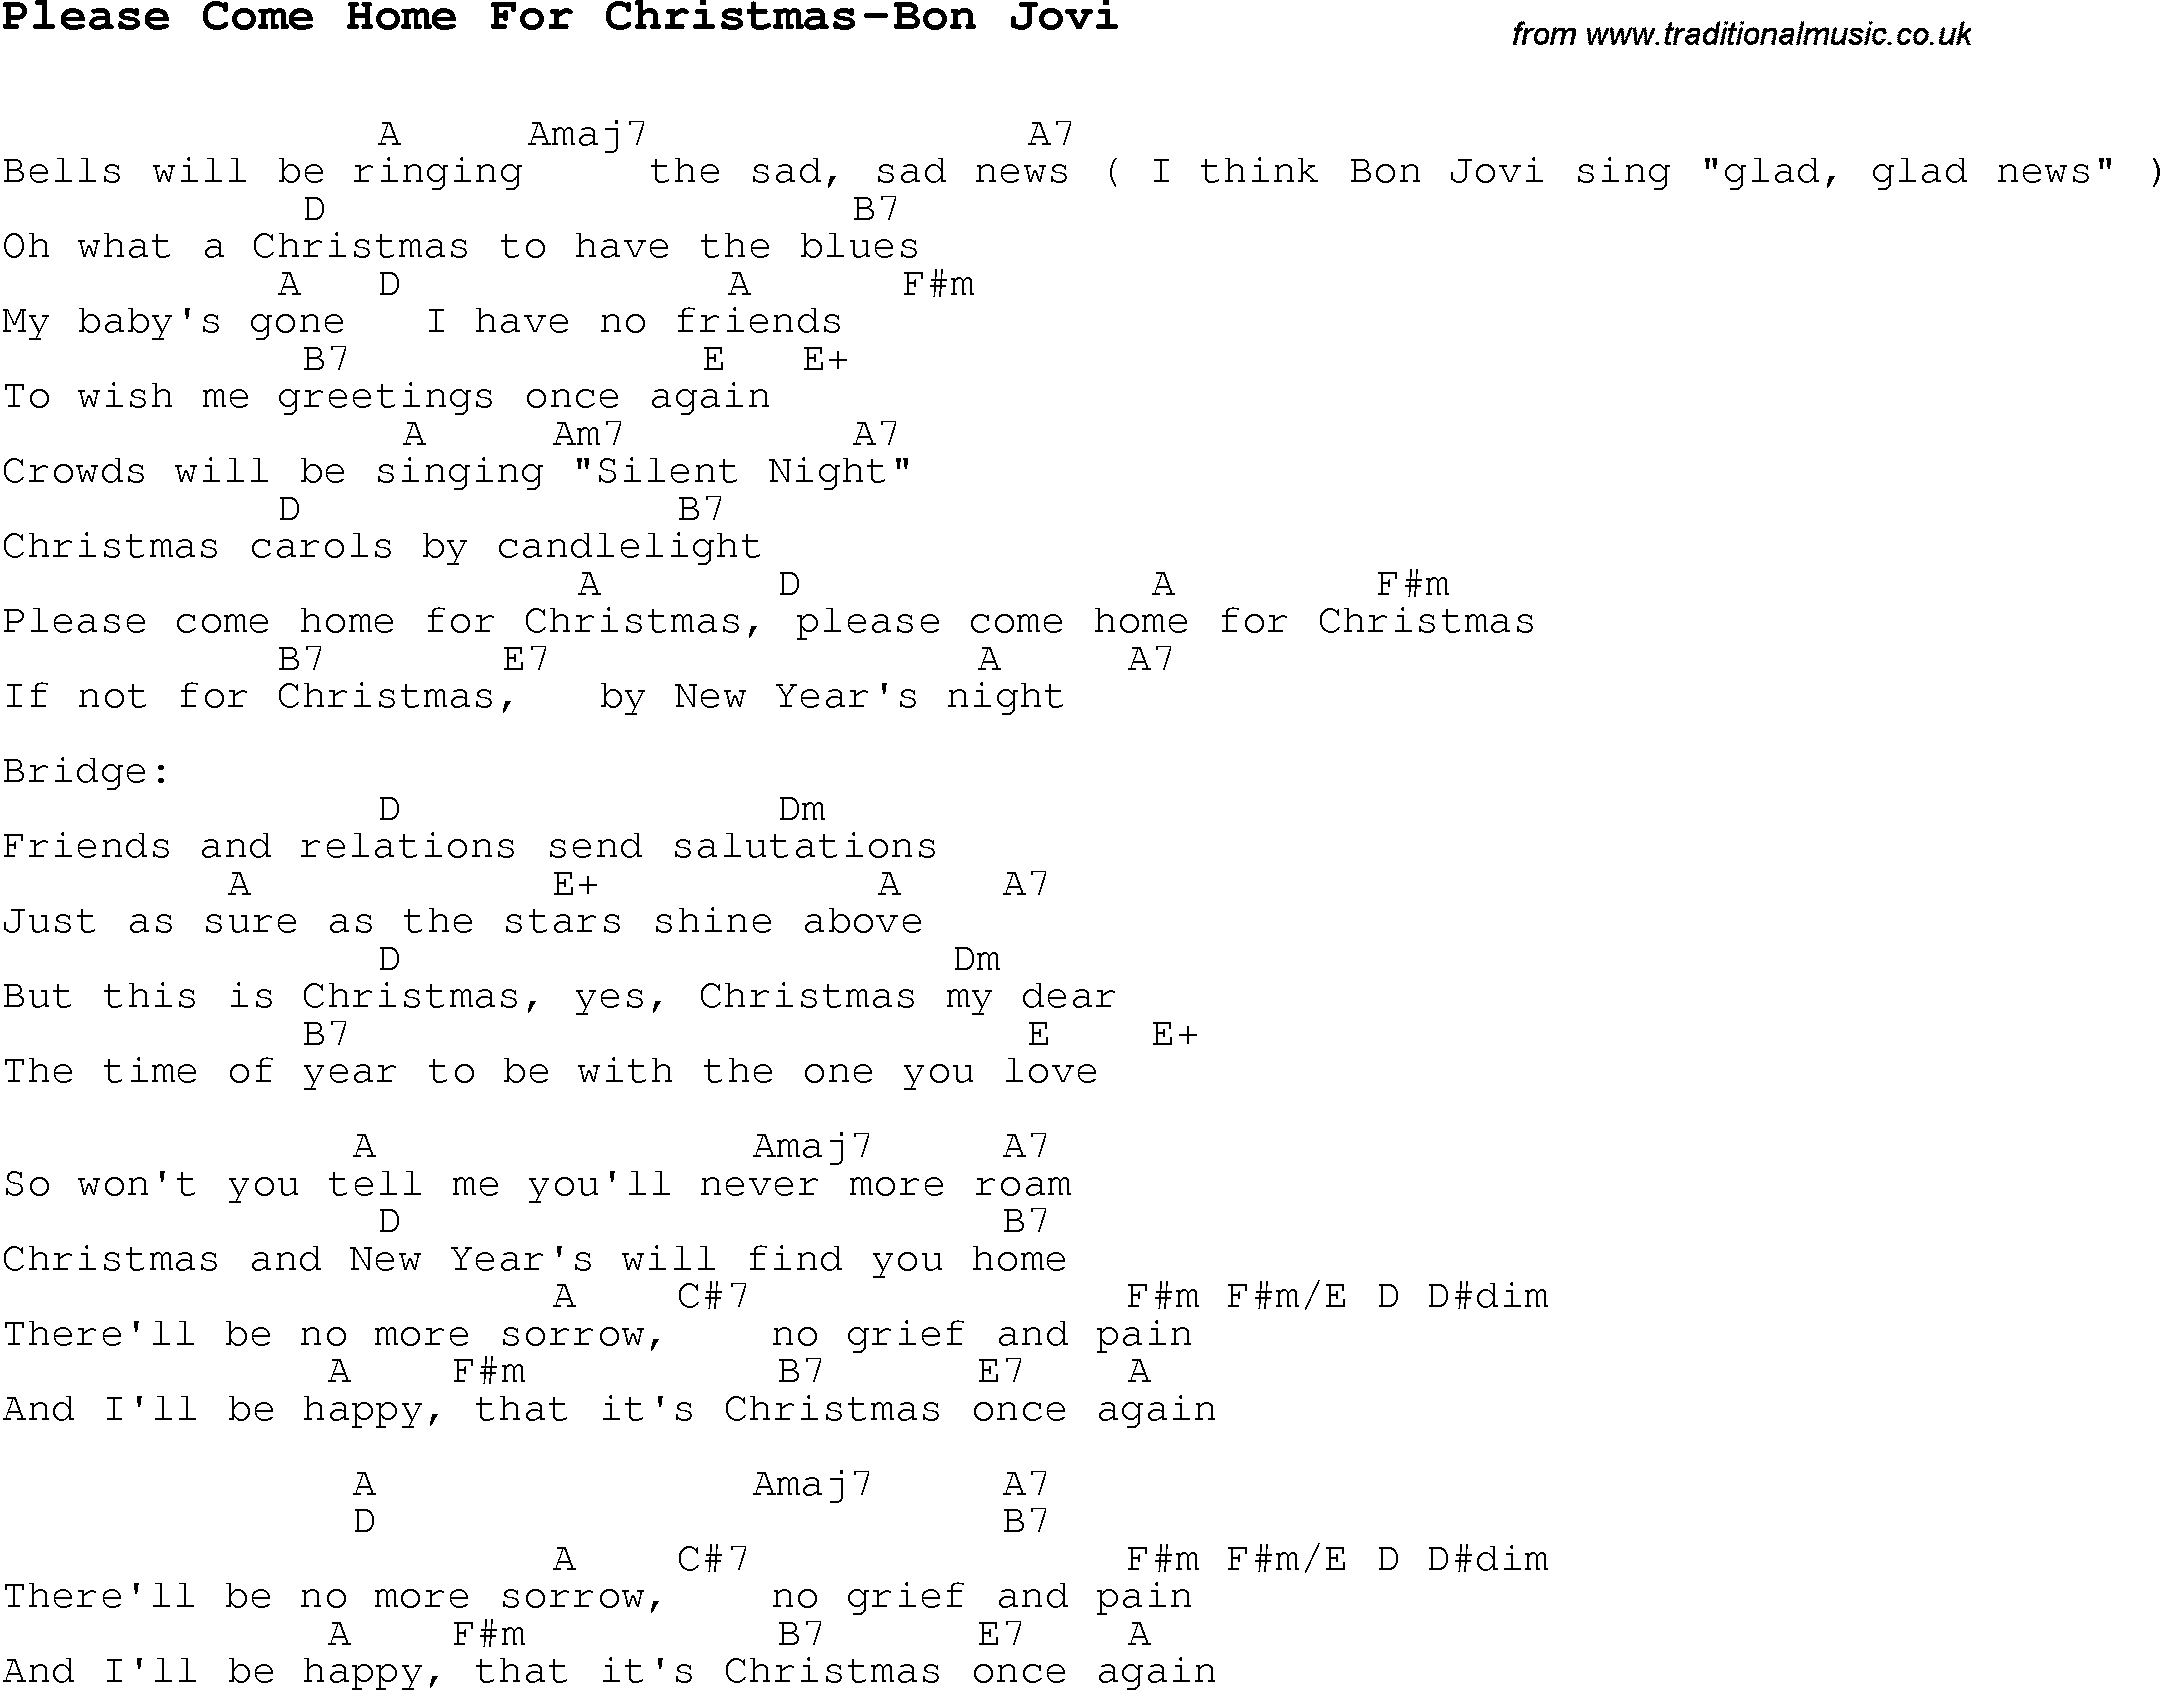 Christmas Songs and Carols, lyrics with chords for guitar banjo for Please Come Home For Christmas-Bon Jovi